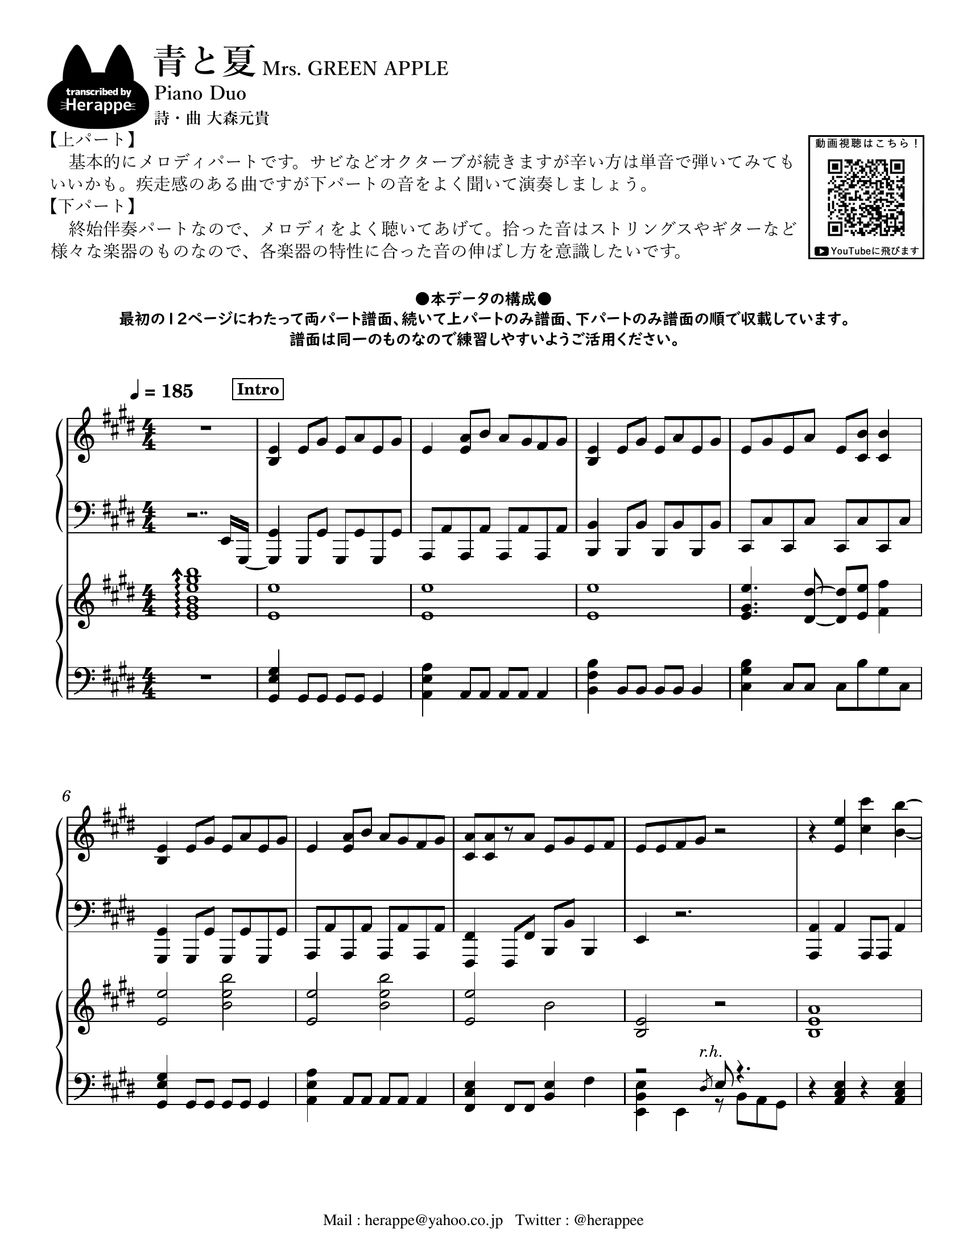 Mrs. GREEN APPLE - Ao to Natsu (Piano Duo) by herappe